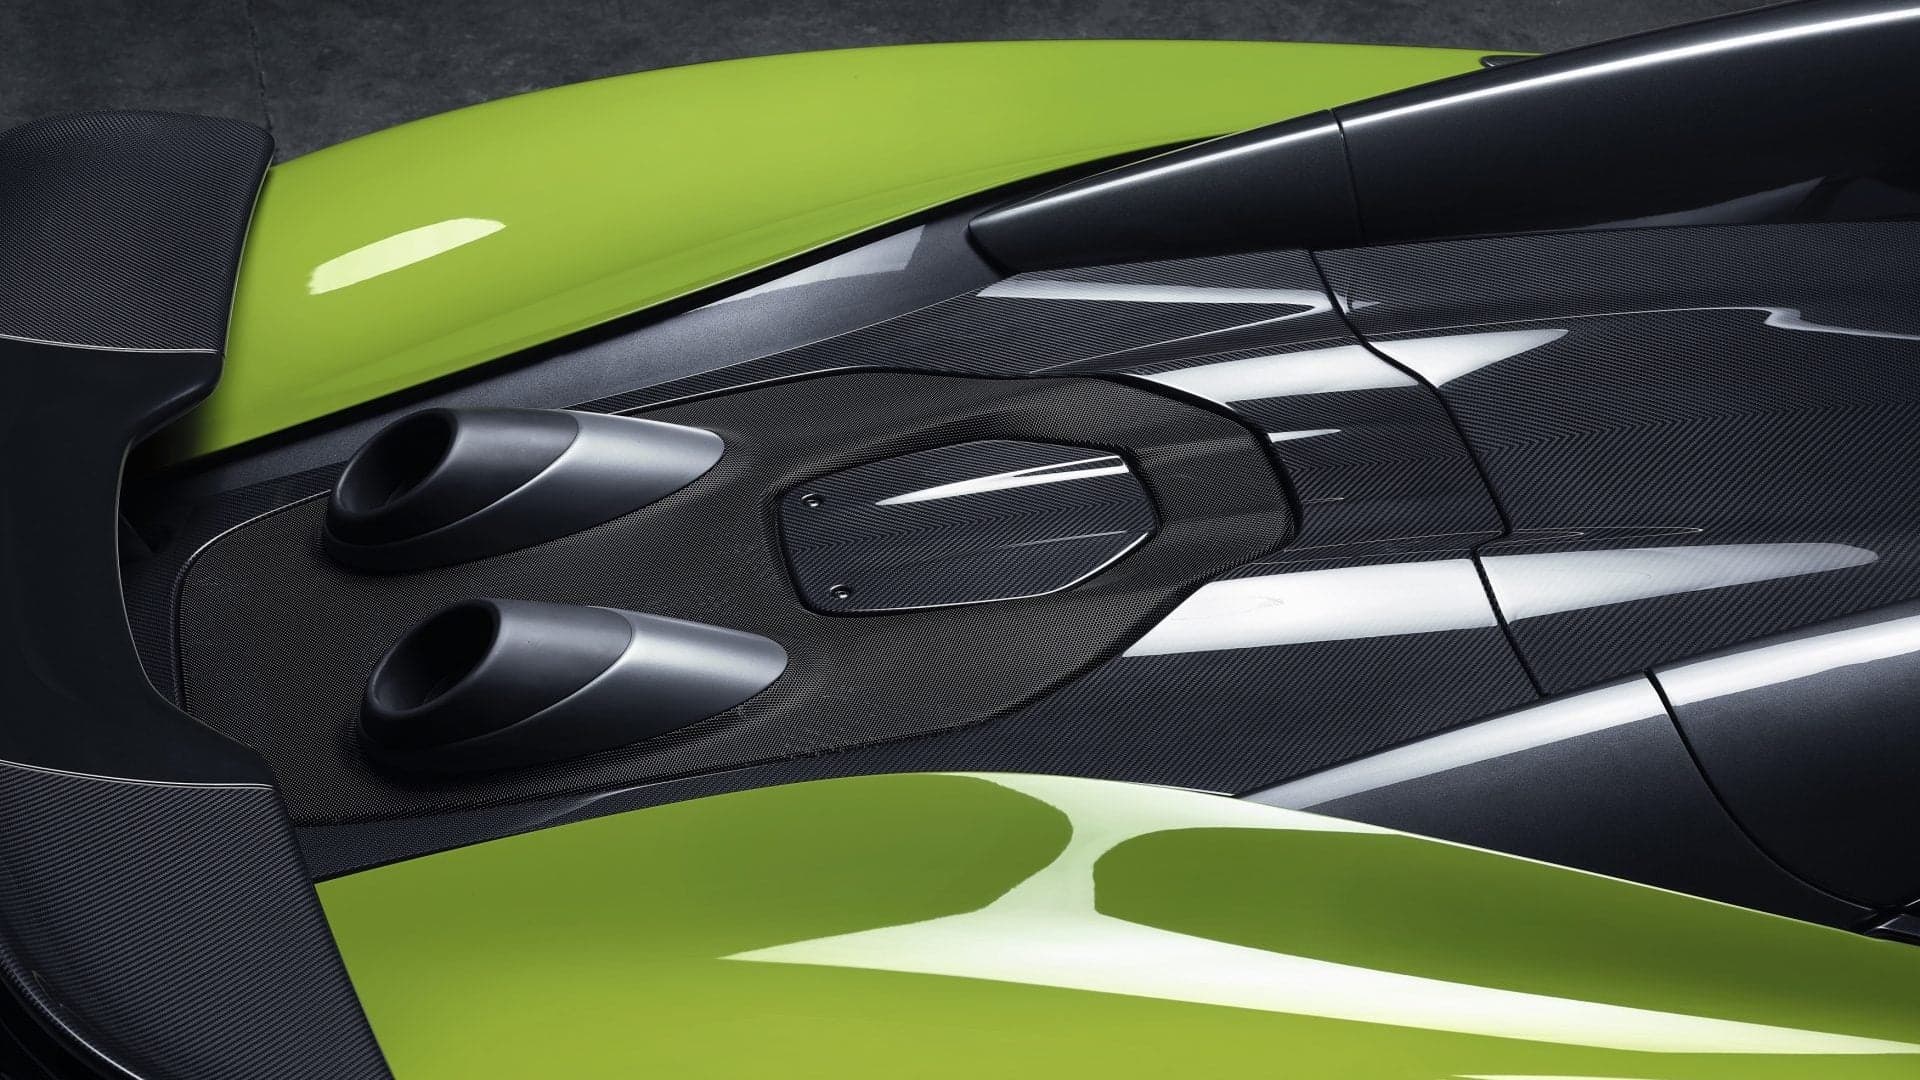 McLaren 600LT Spider Image Teased Ahead of Next Week’s World Debut